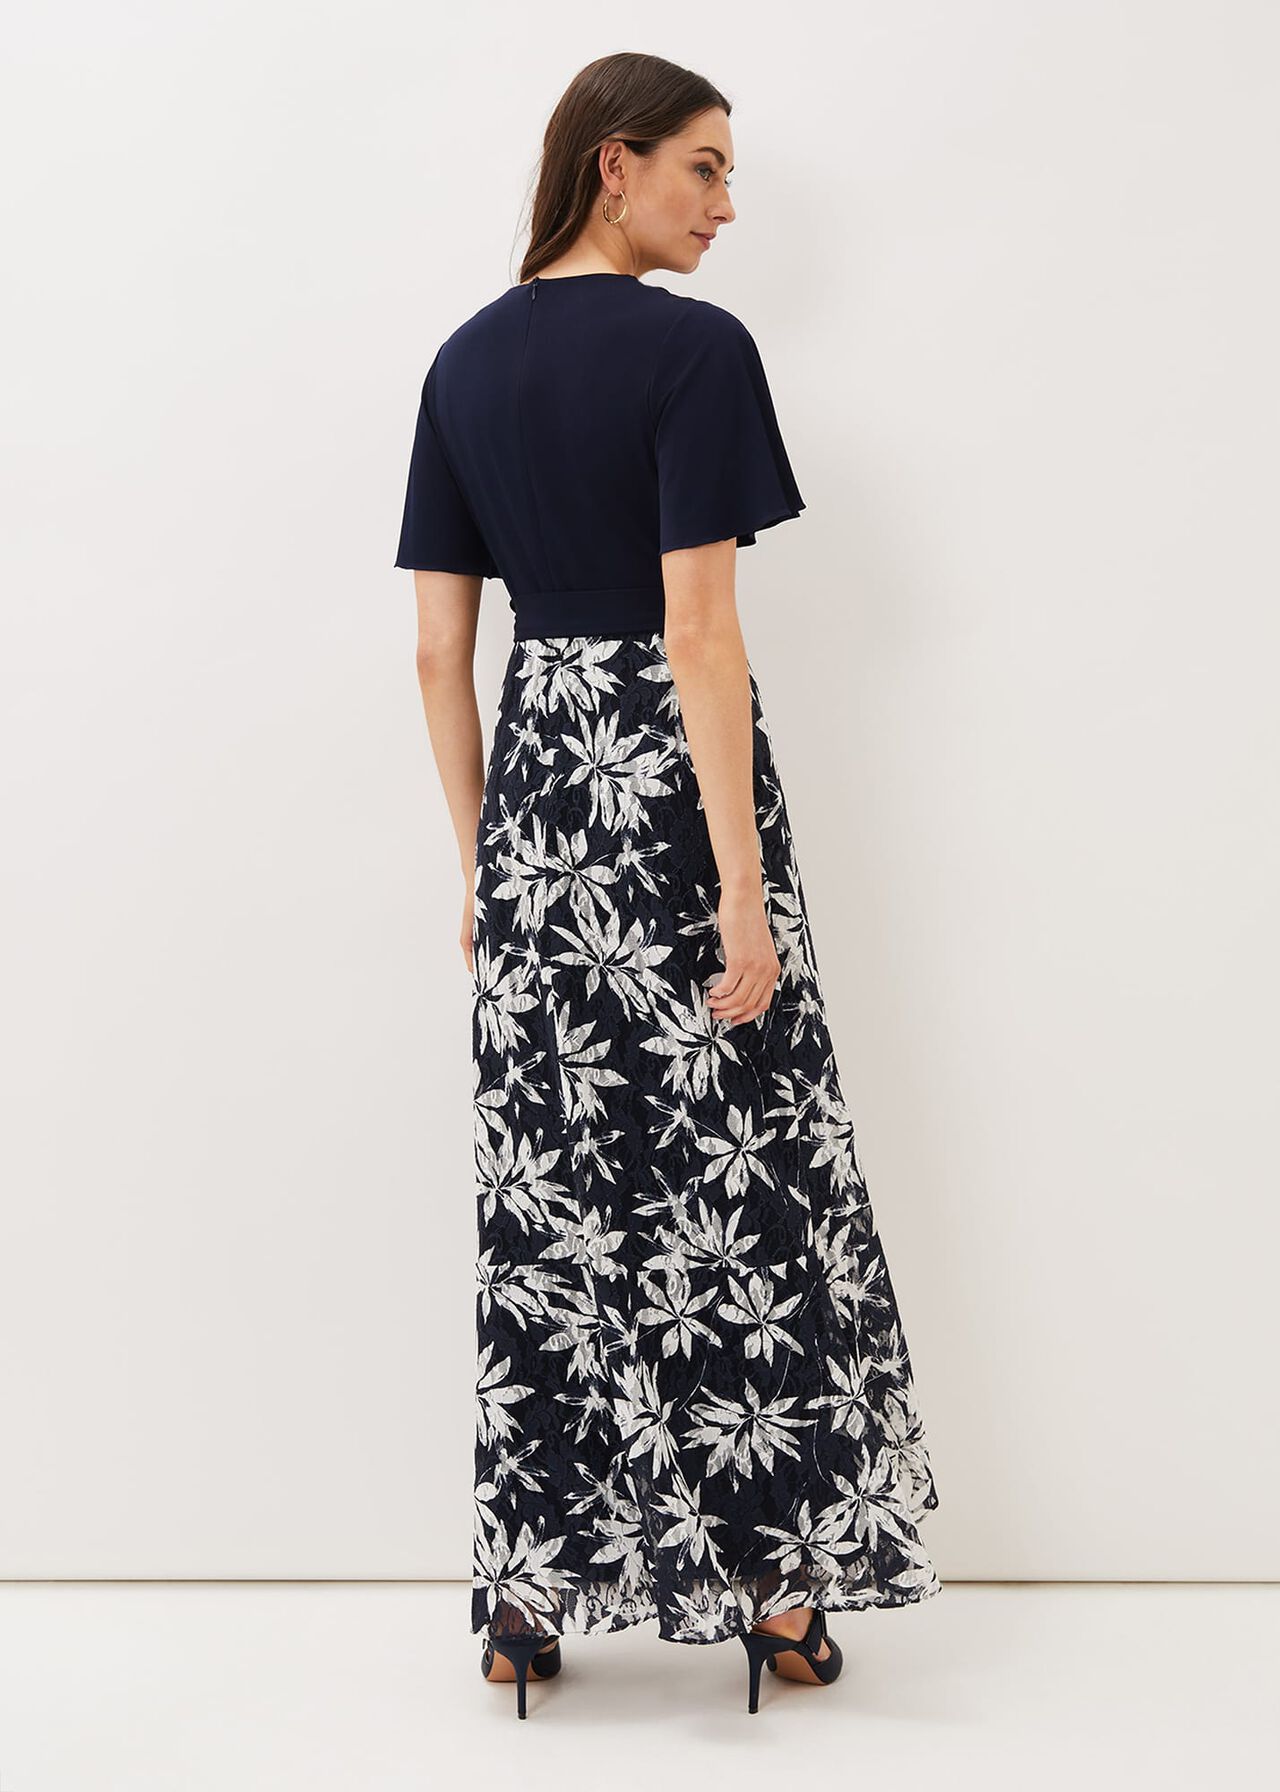 Brogan Lace Skirt Maxi Dress